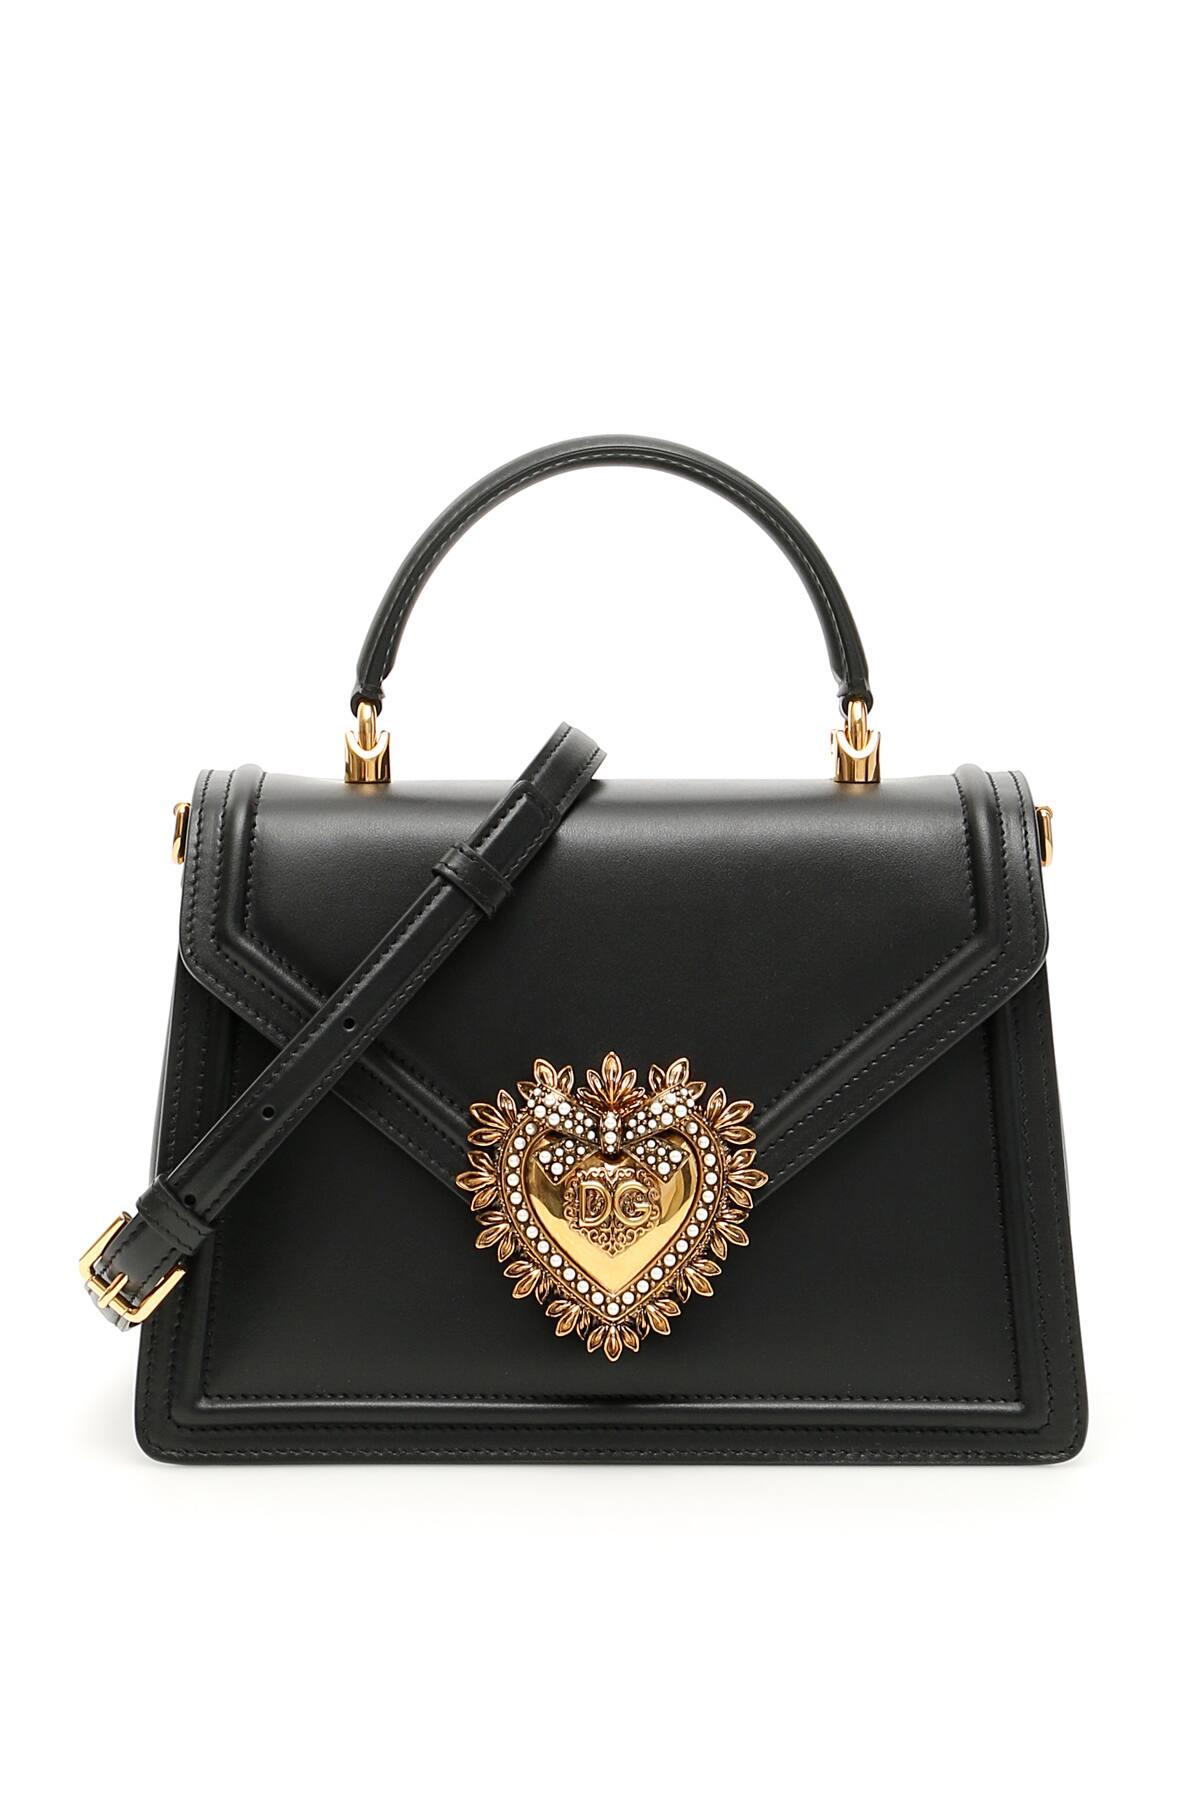 Dolce & Gabbana Leather Devotion Bag in Black - Lyst